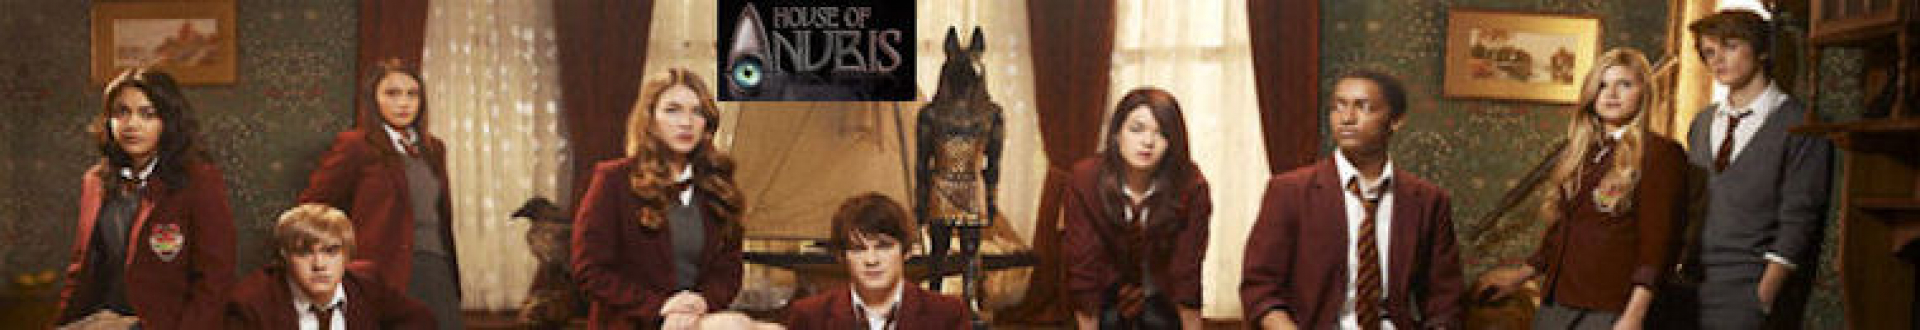 Image illustrative de House of Anubis